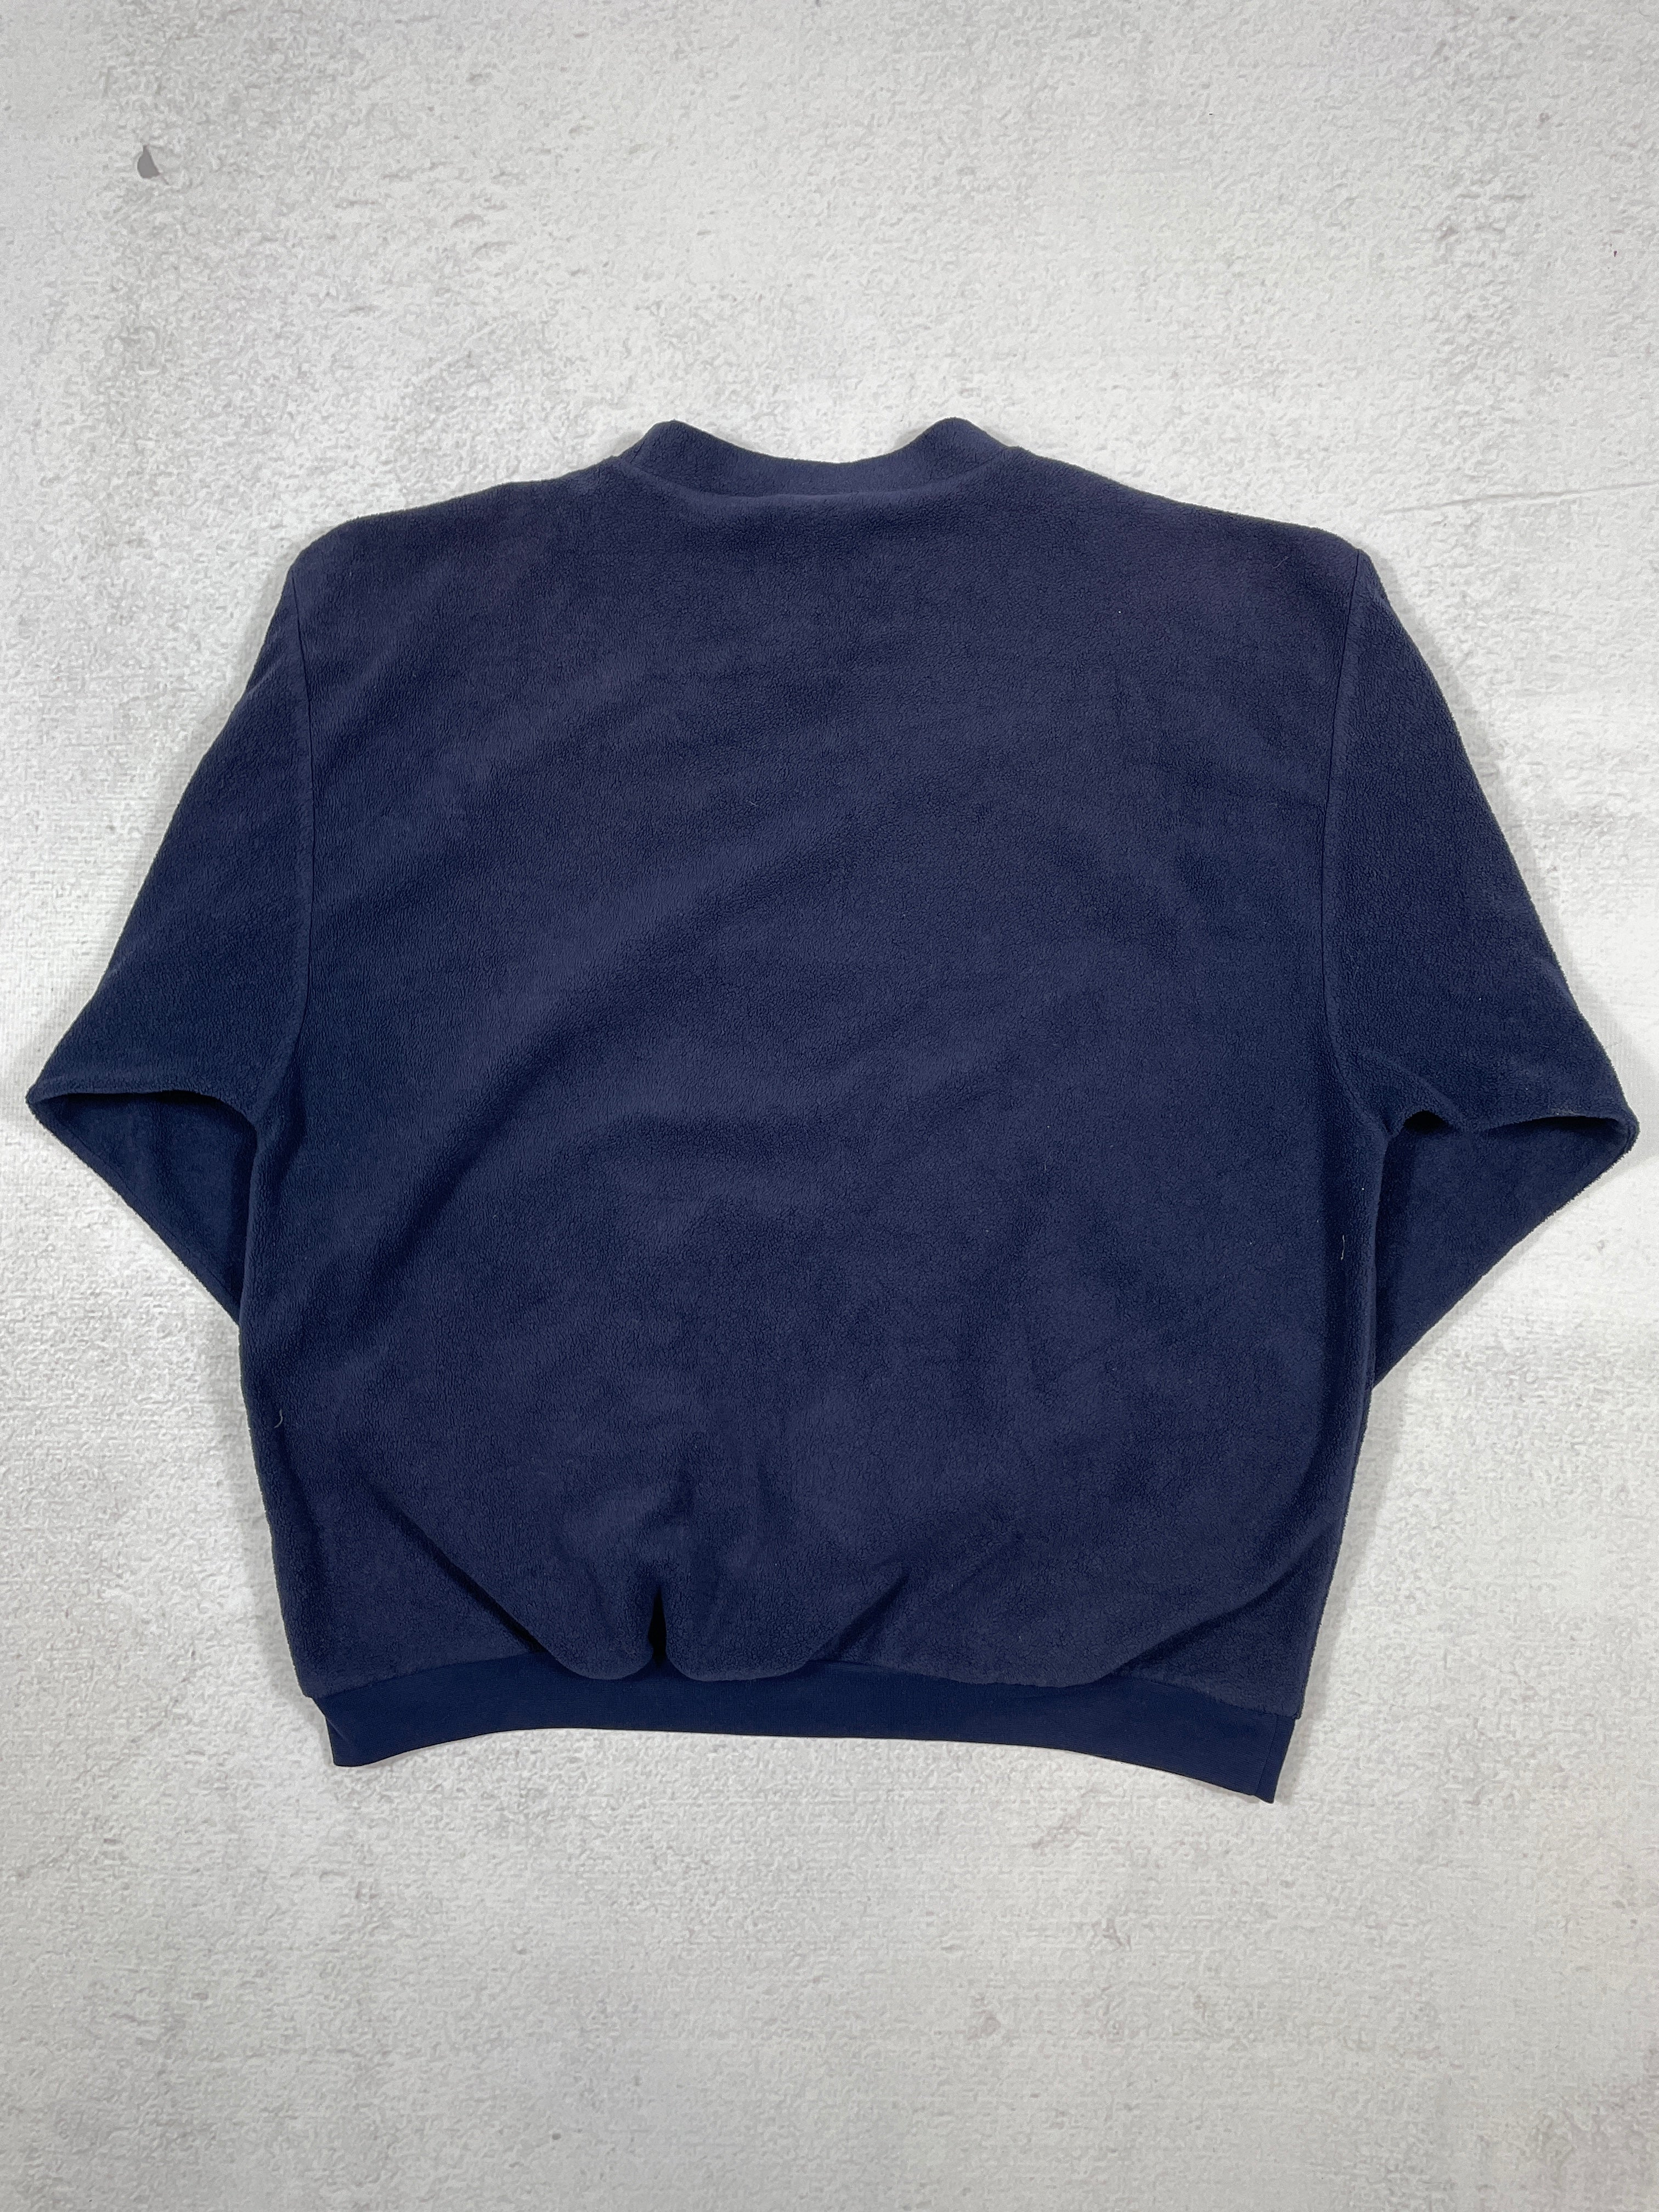 Vintage Fila Fleece Crewneck Sweatshirt - Men's 2XL